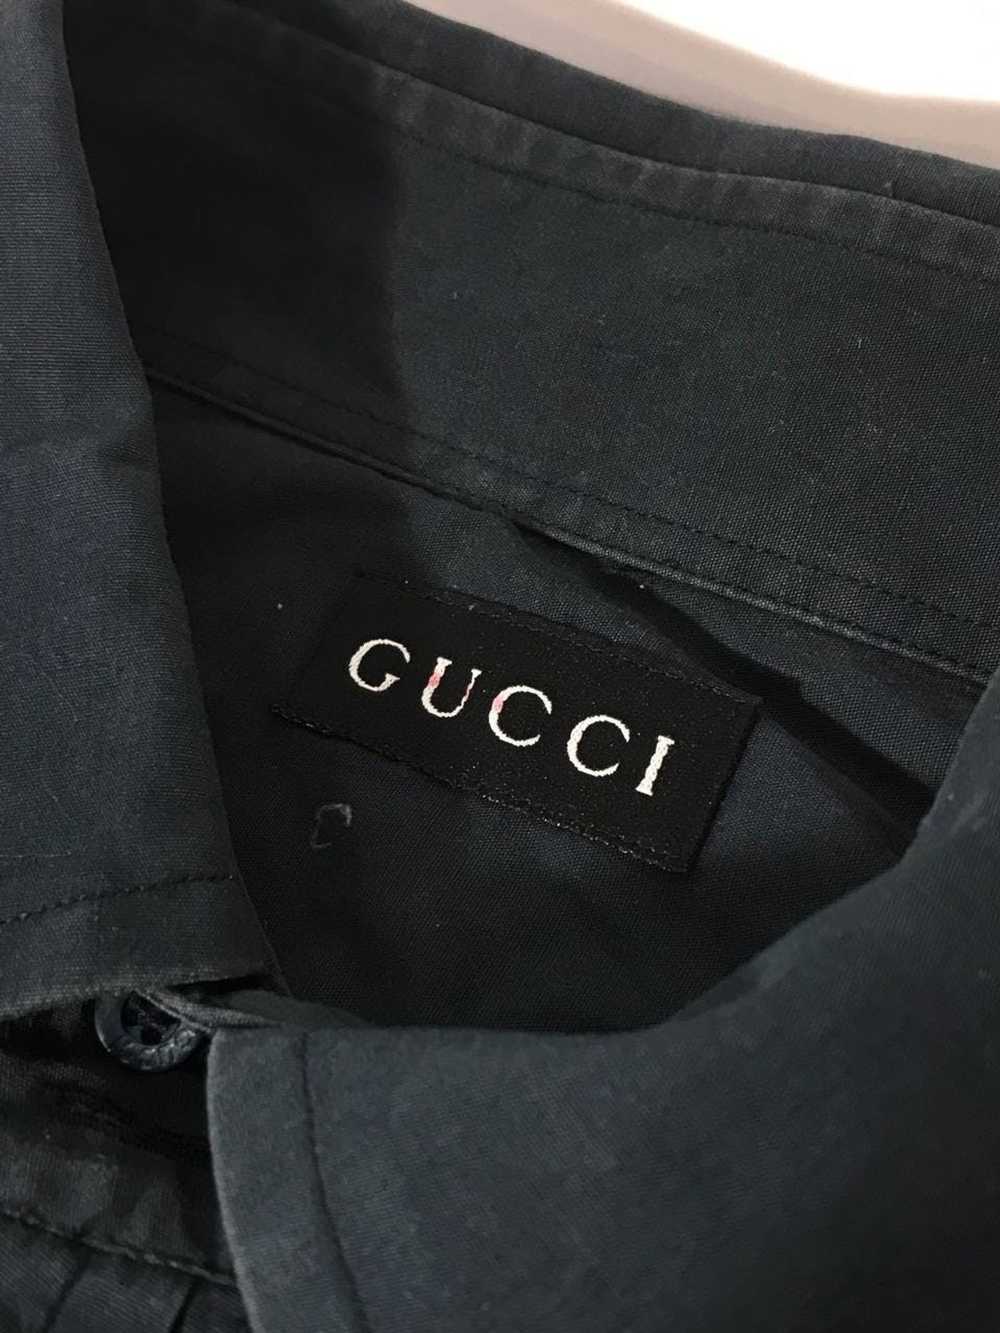 Gucci × Luxury × Rare Gucci X Tom Ford Shirt - image 6